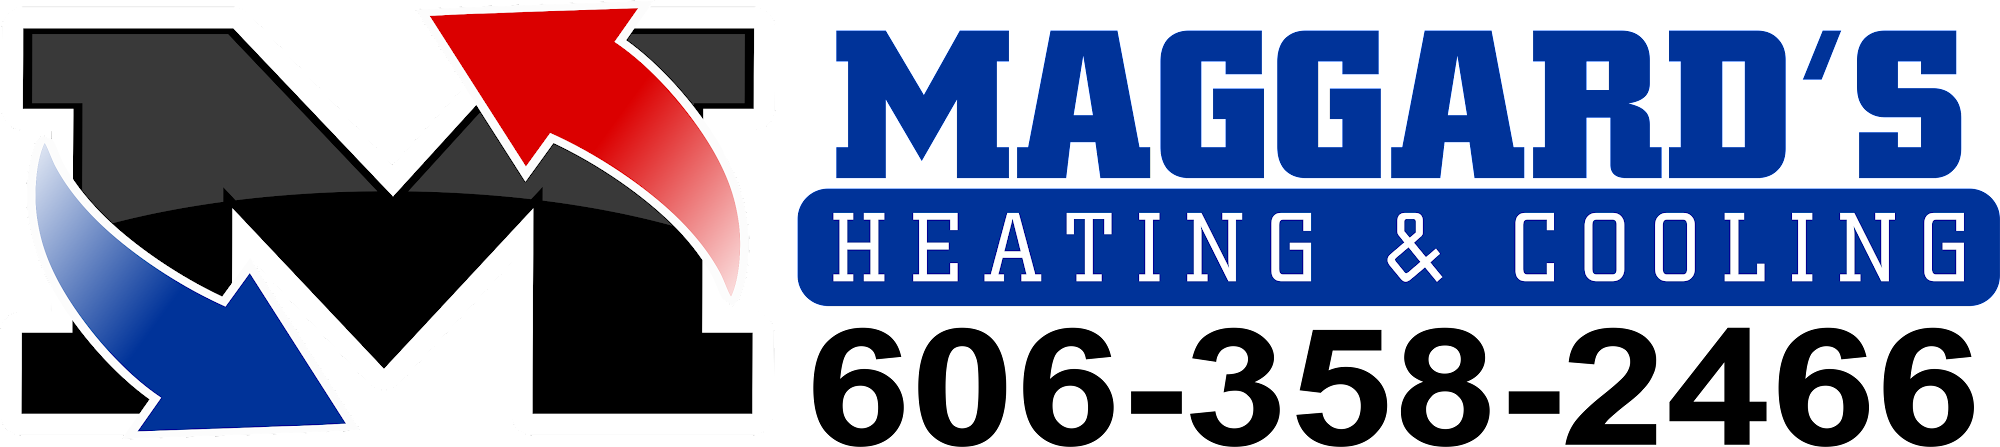 Maggard's Heating & Cooling 140 County Line Branch, Garrett Kentucky 41630